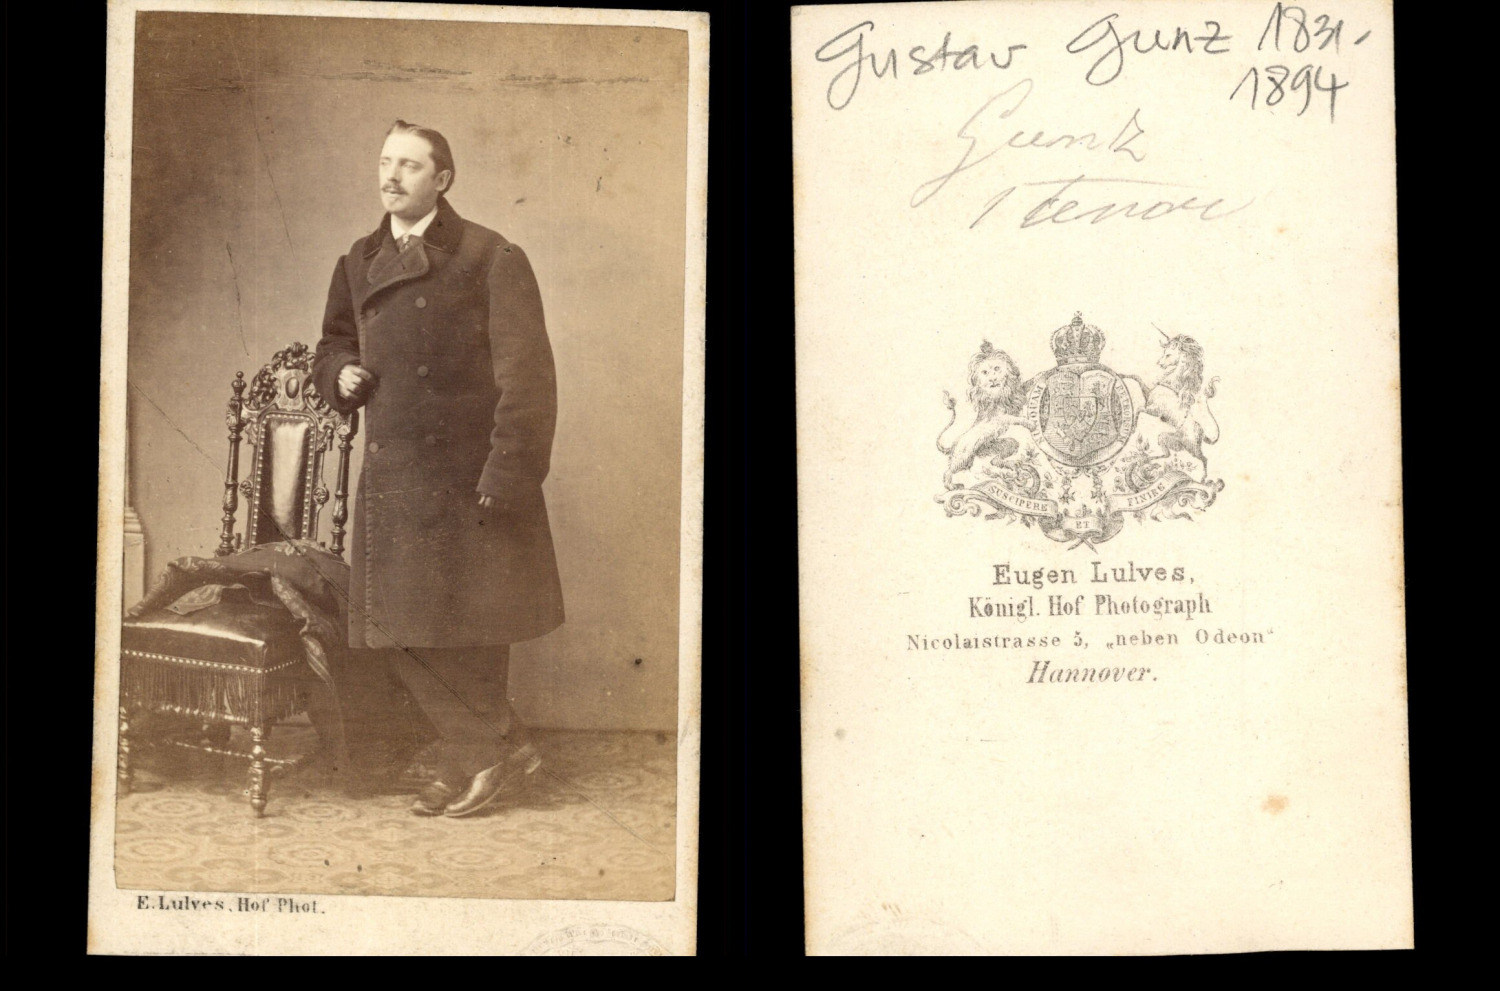 Lulves, Hannover, Gustav Gunz, Tenor Vintage Albumen Print CDV.1831-1894